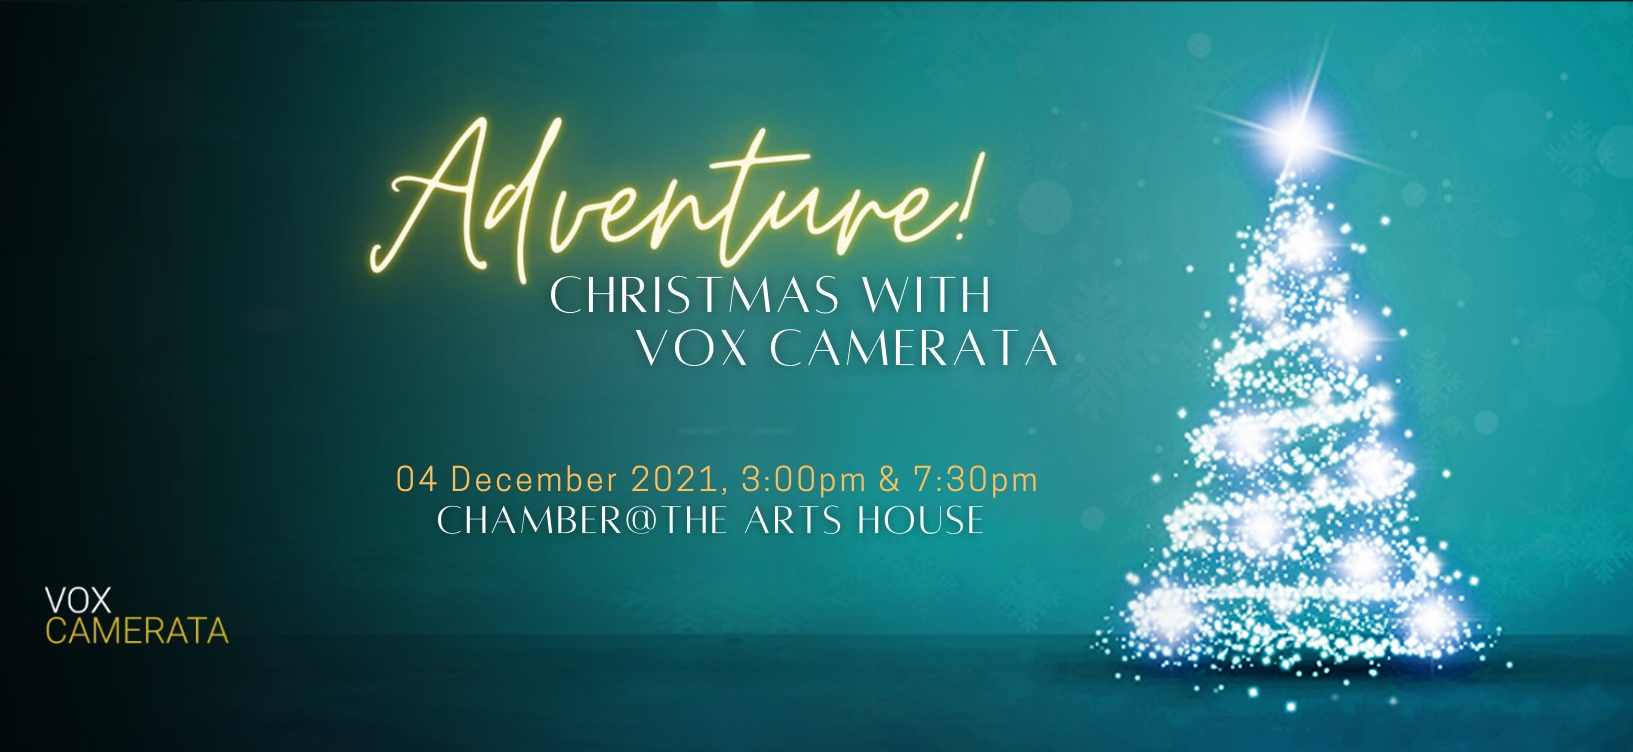 Adventure! 2021: Christmas with Vox Camerata